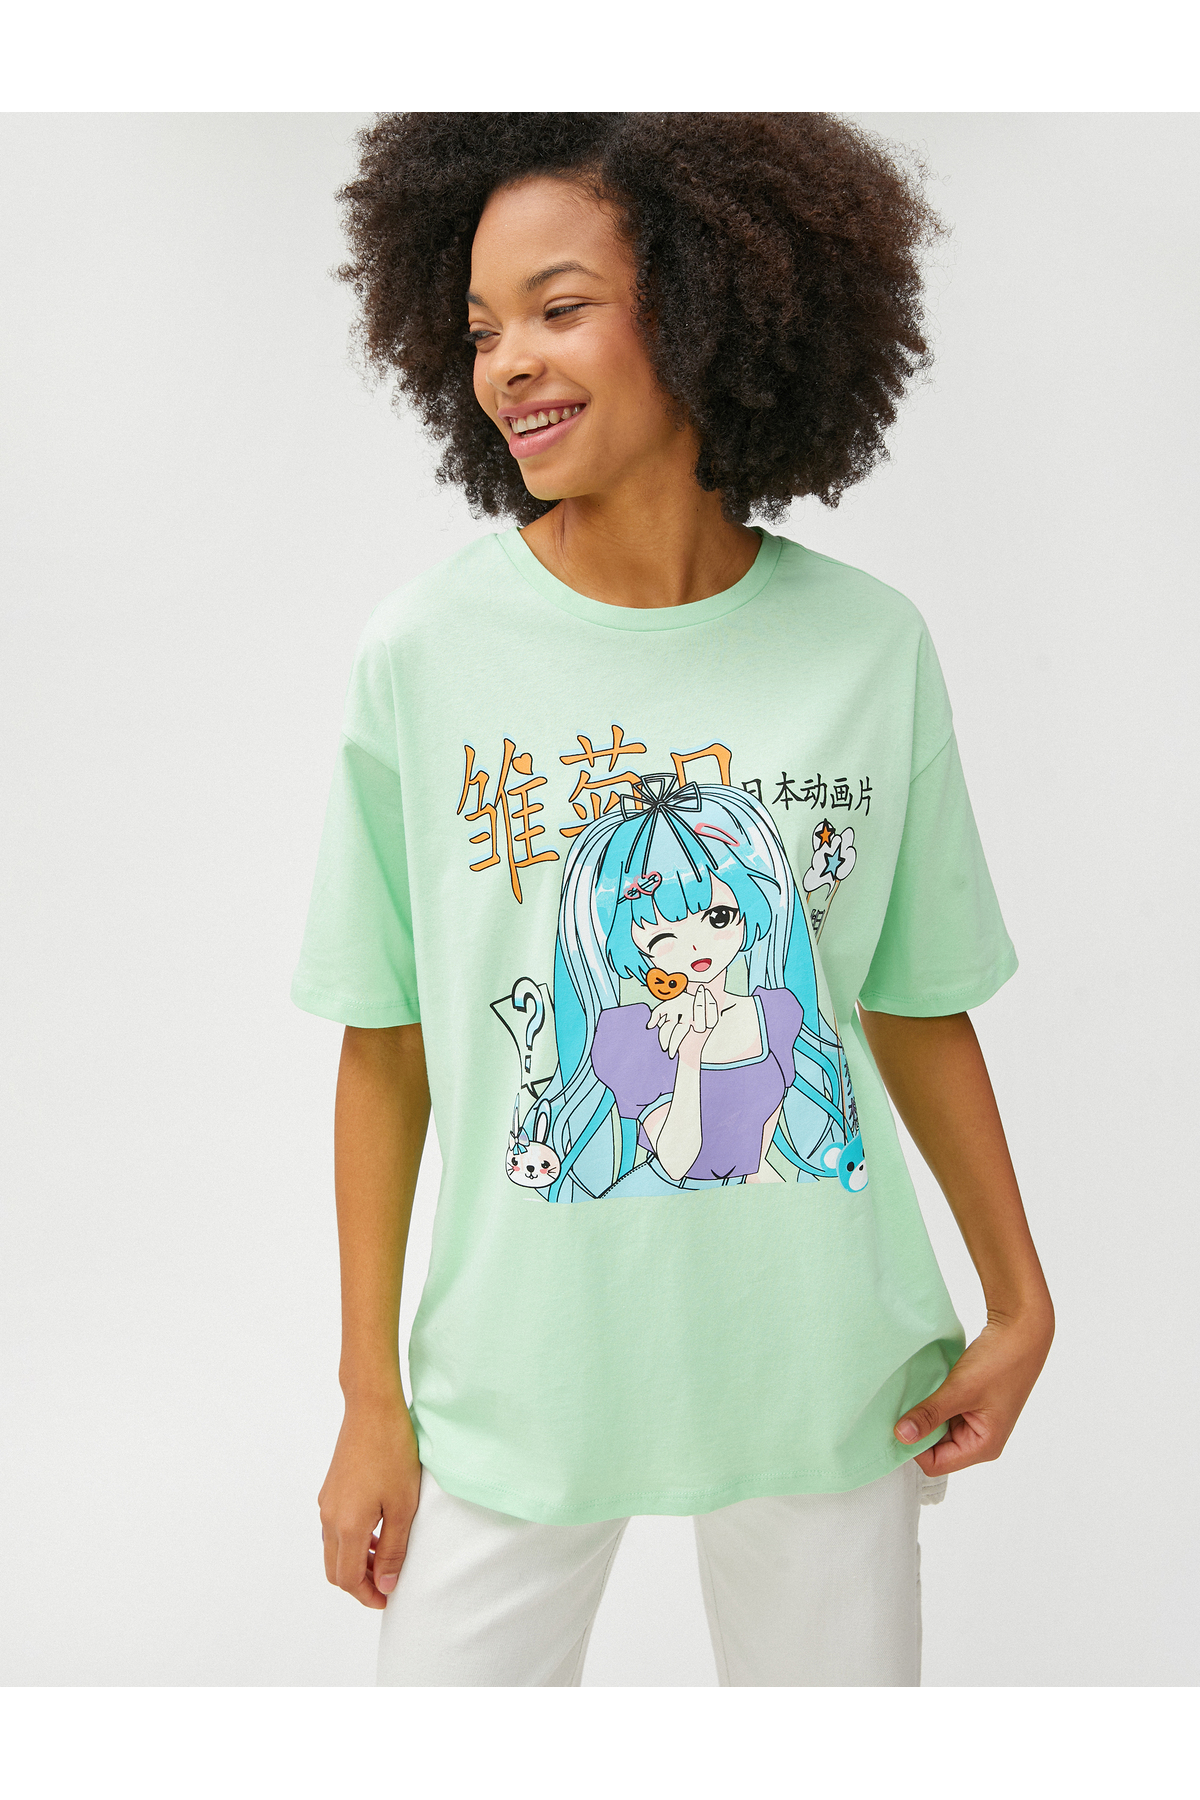 Koton Anime T-Shirt Oversize Crew Neck Short Sleeve Cotton